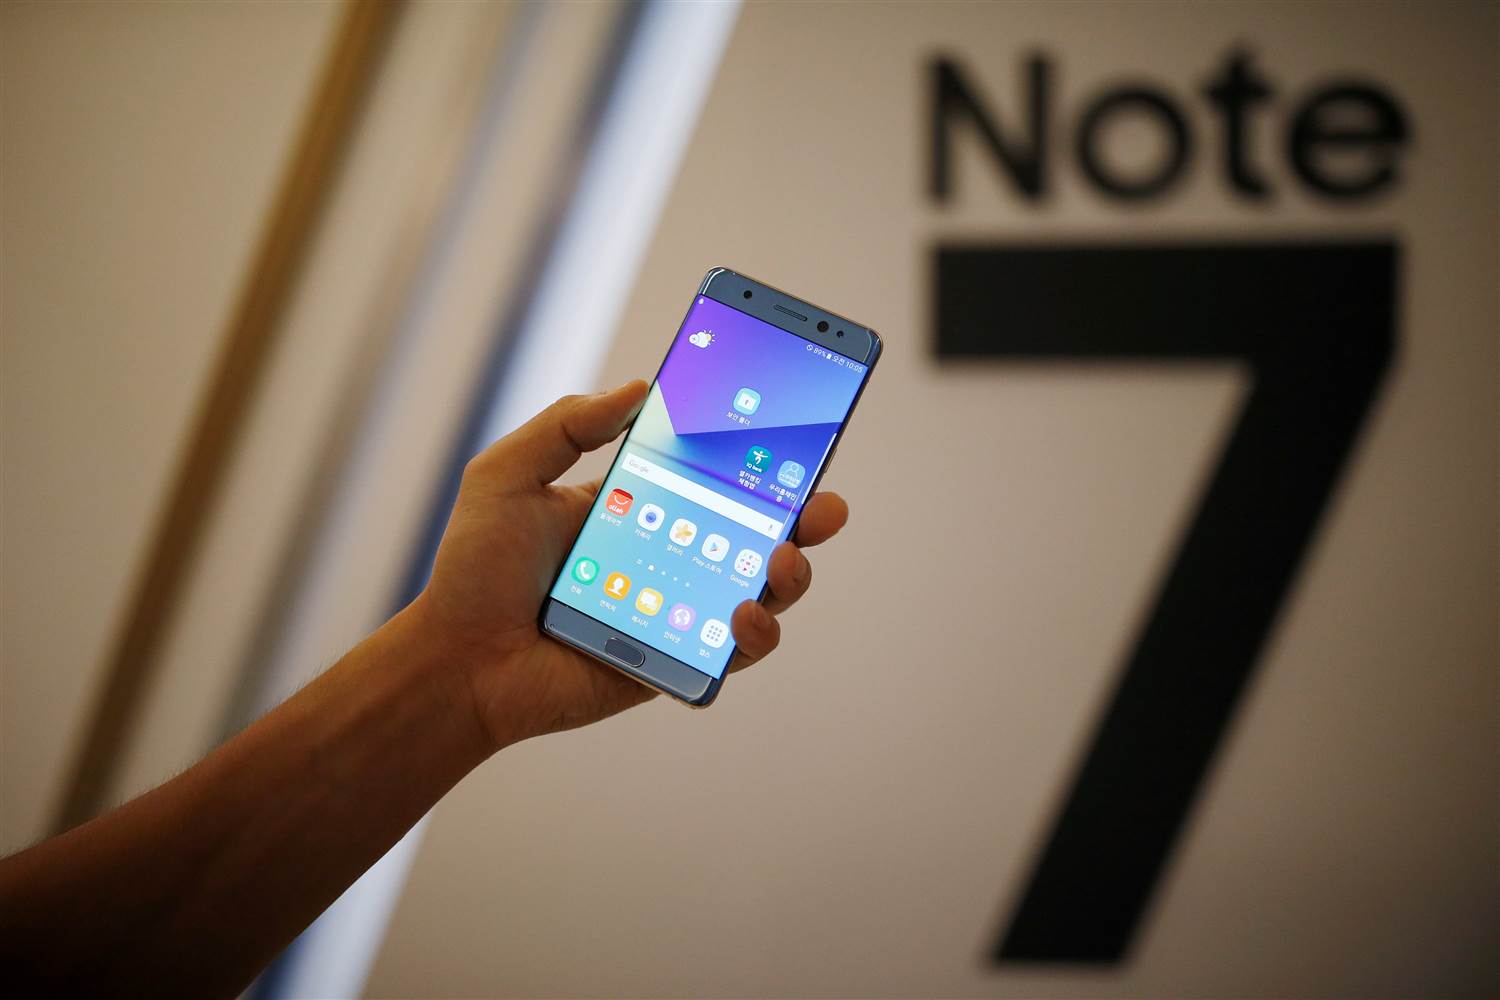 Samsung Galaxy Note 7 iin havayollarnda destek noktalar